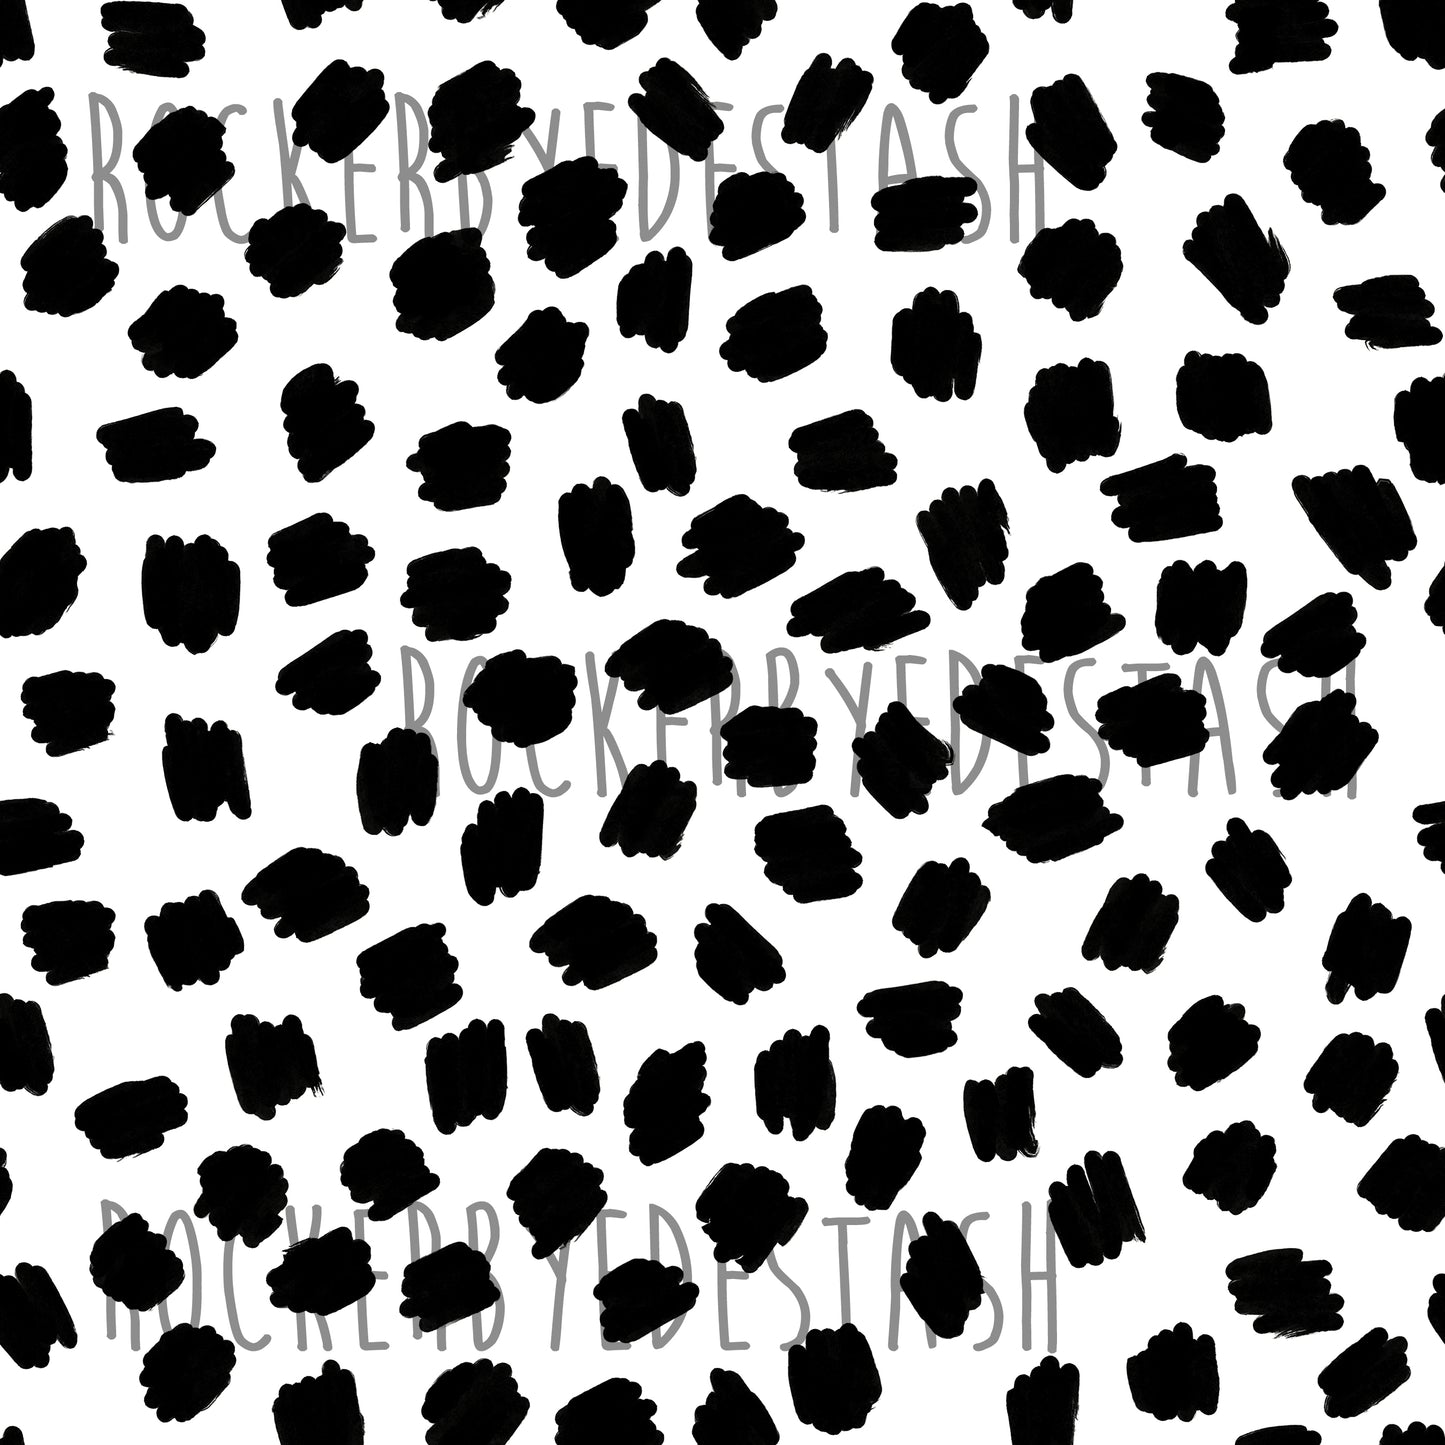 RETAIL - Cotton Double Gauze ACCENT prints - 1 yard per quantity Coordinate designs Black and white